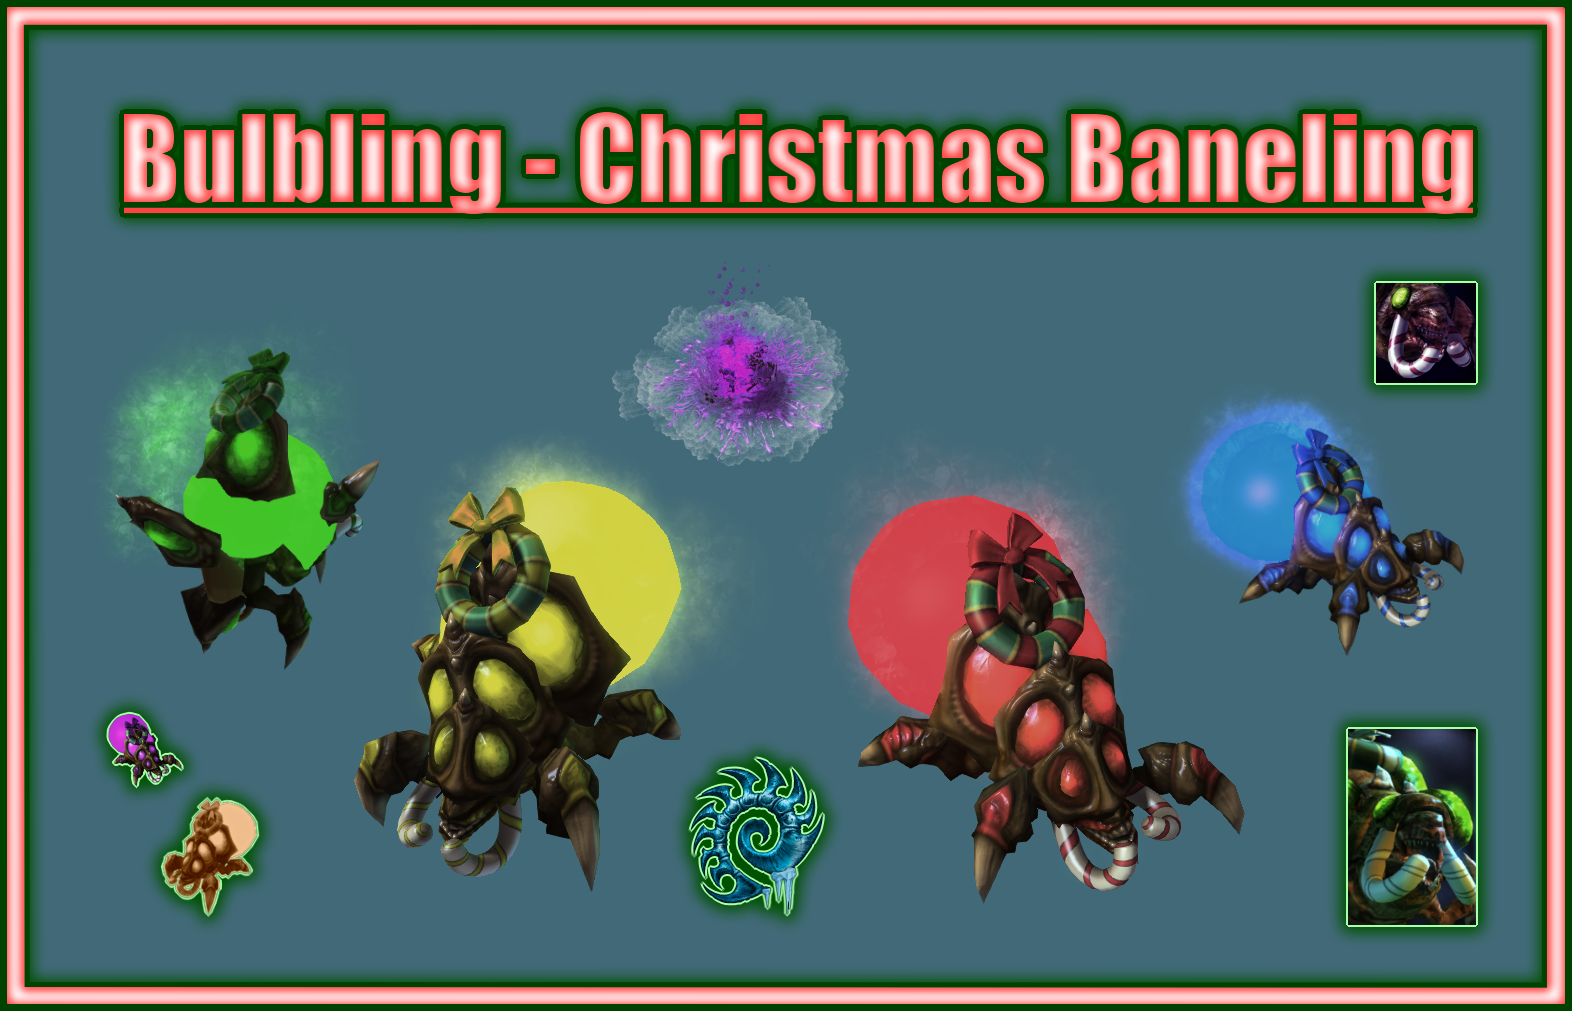 Bulbling - Christmas Baneling